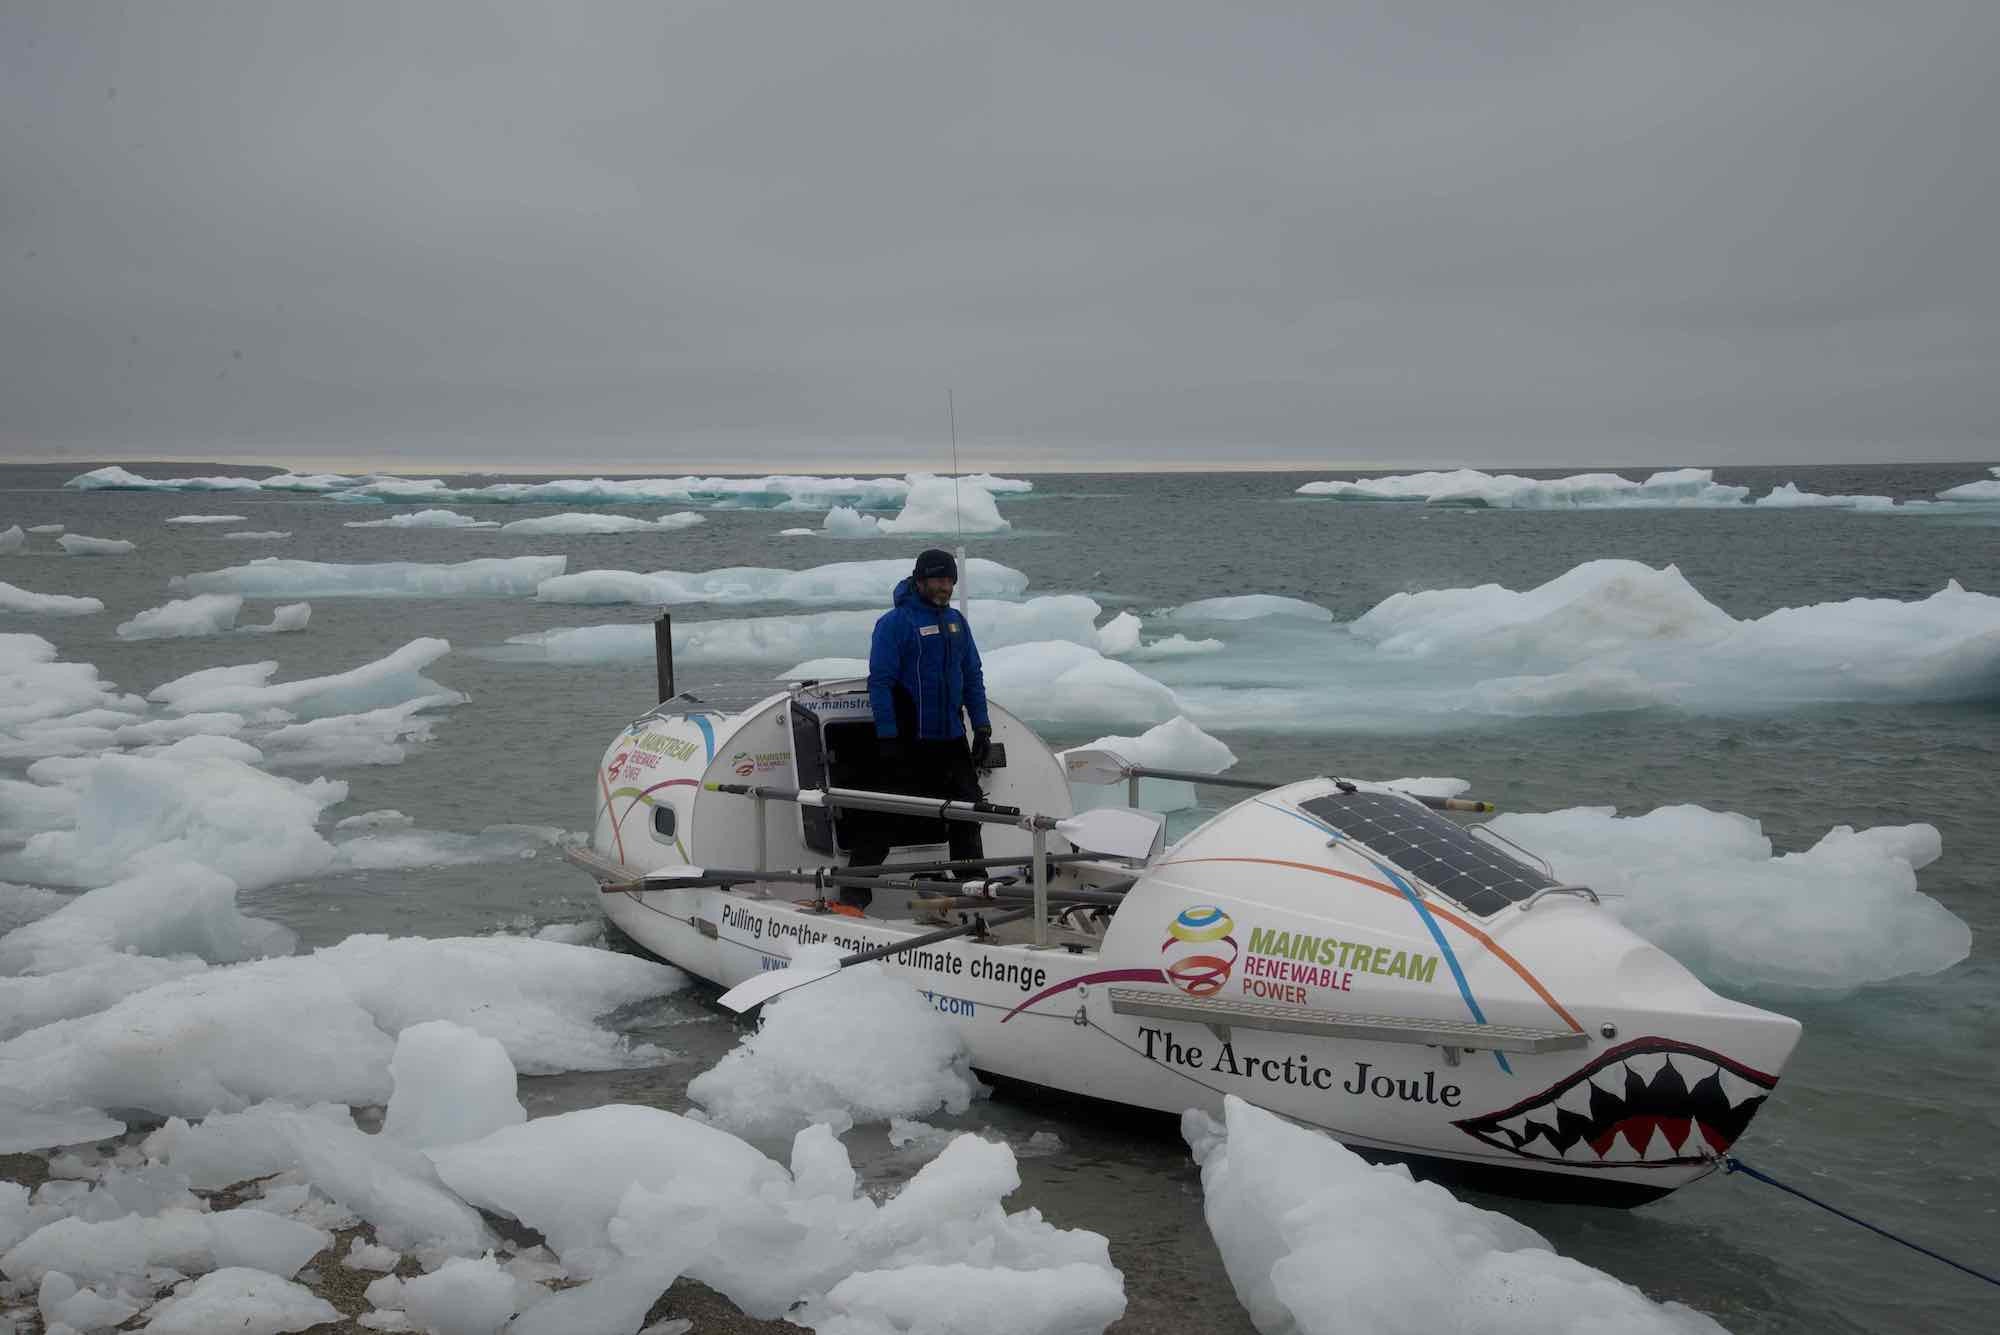 Rowing the Northwest Passage